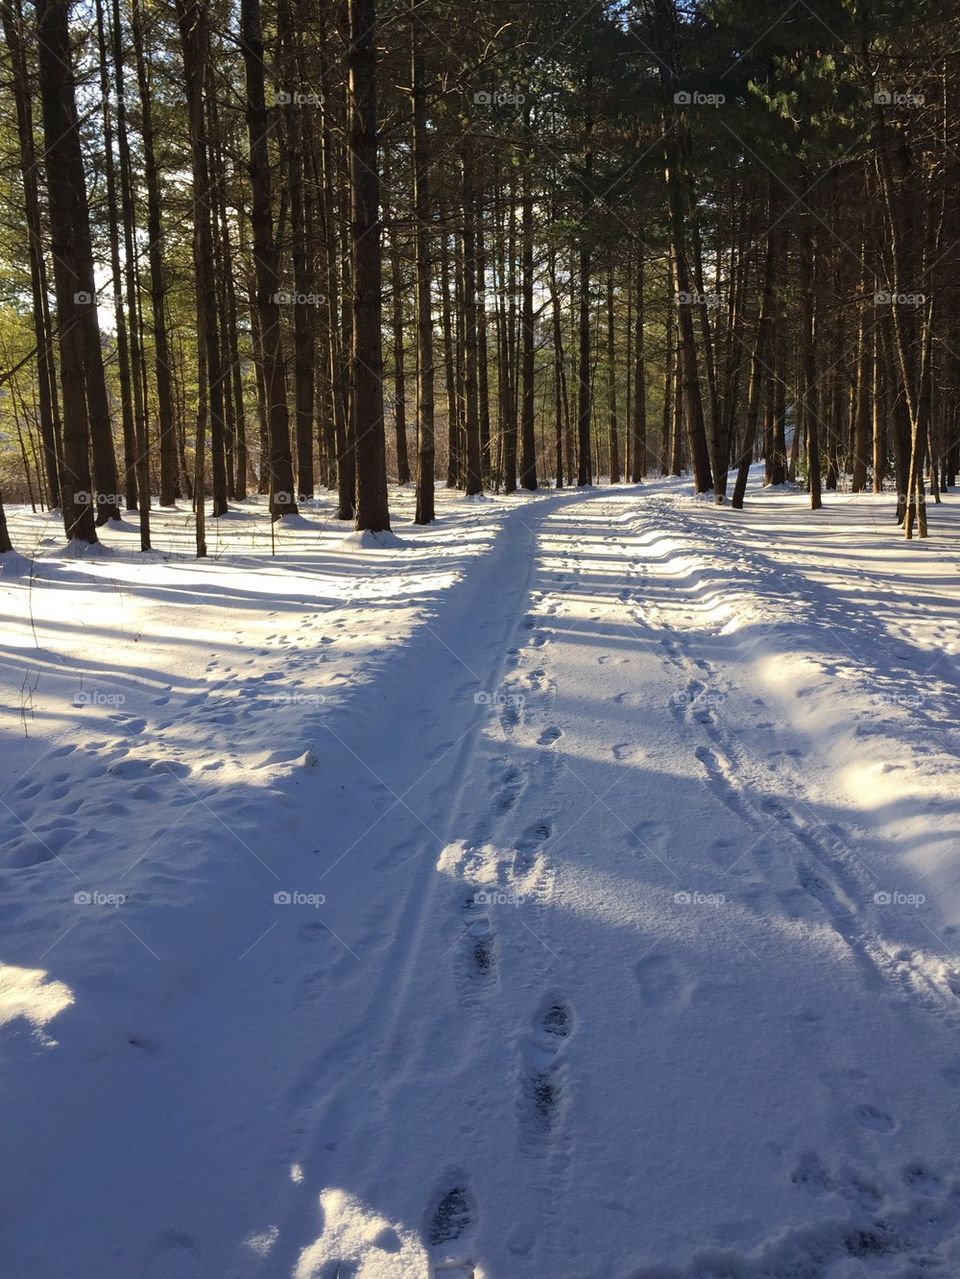 "Winter walk"

Boone, NC